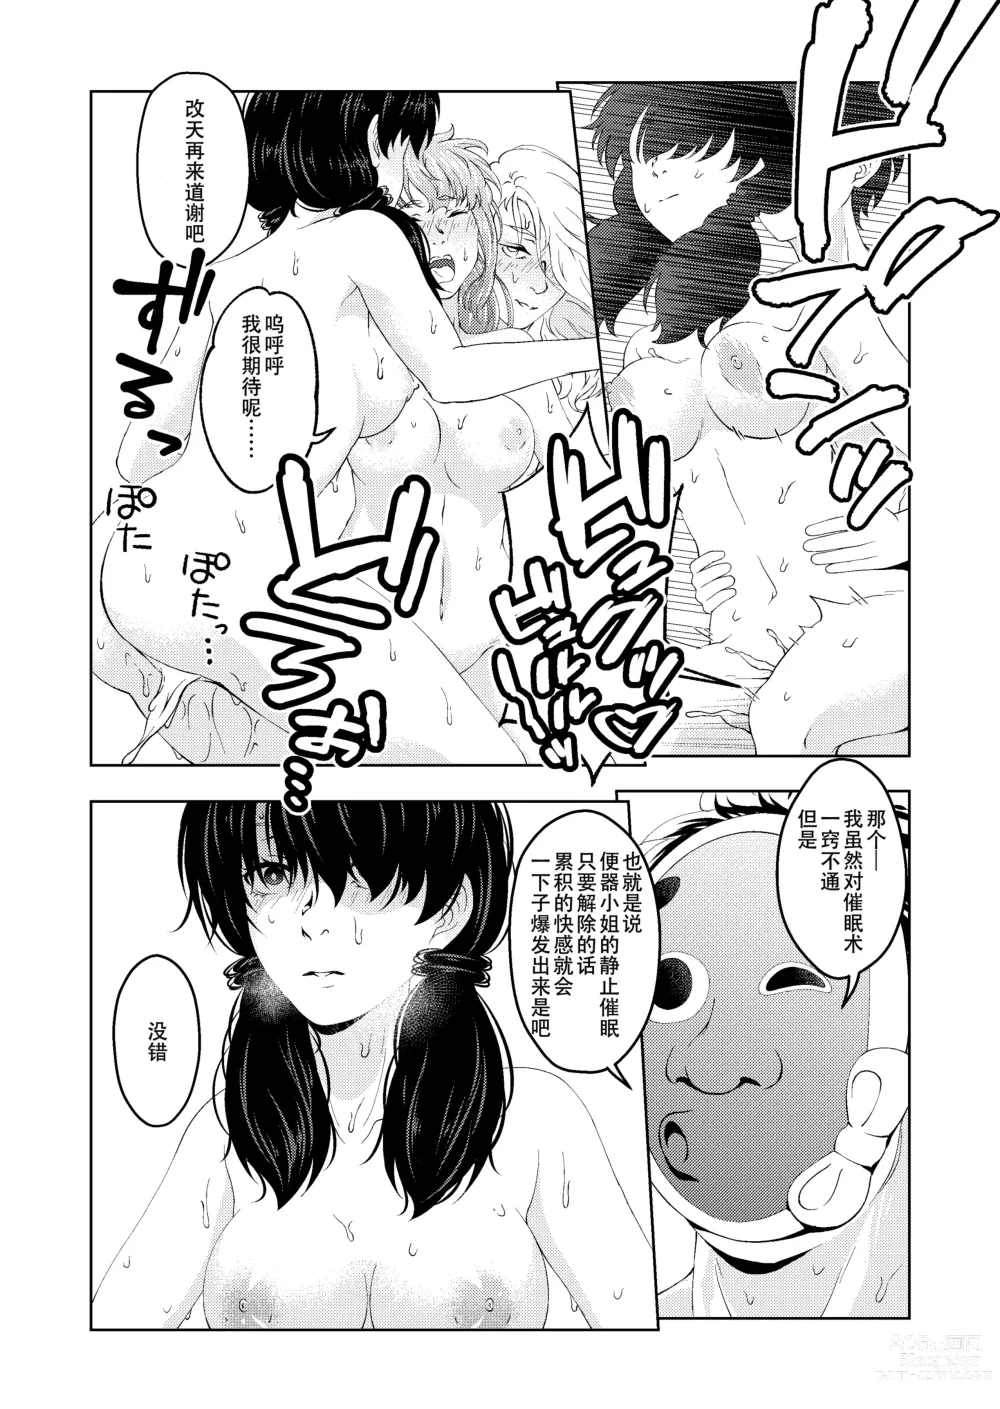 Page 50 of doujinshi Saimin Stream #1.5